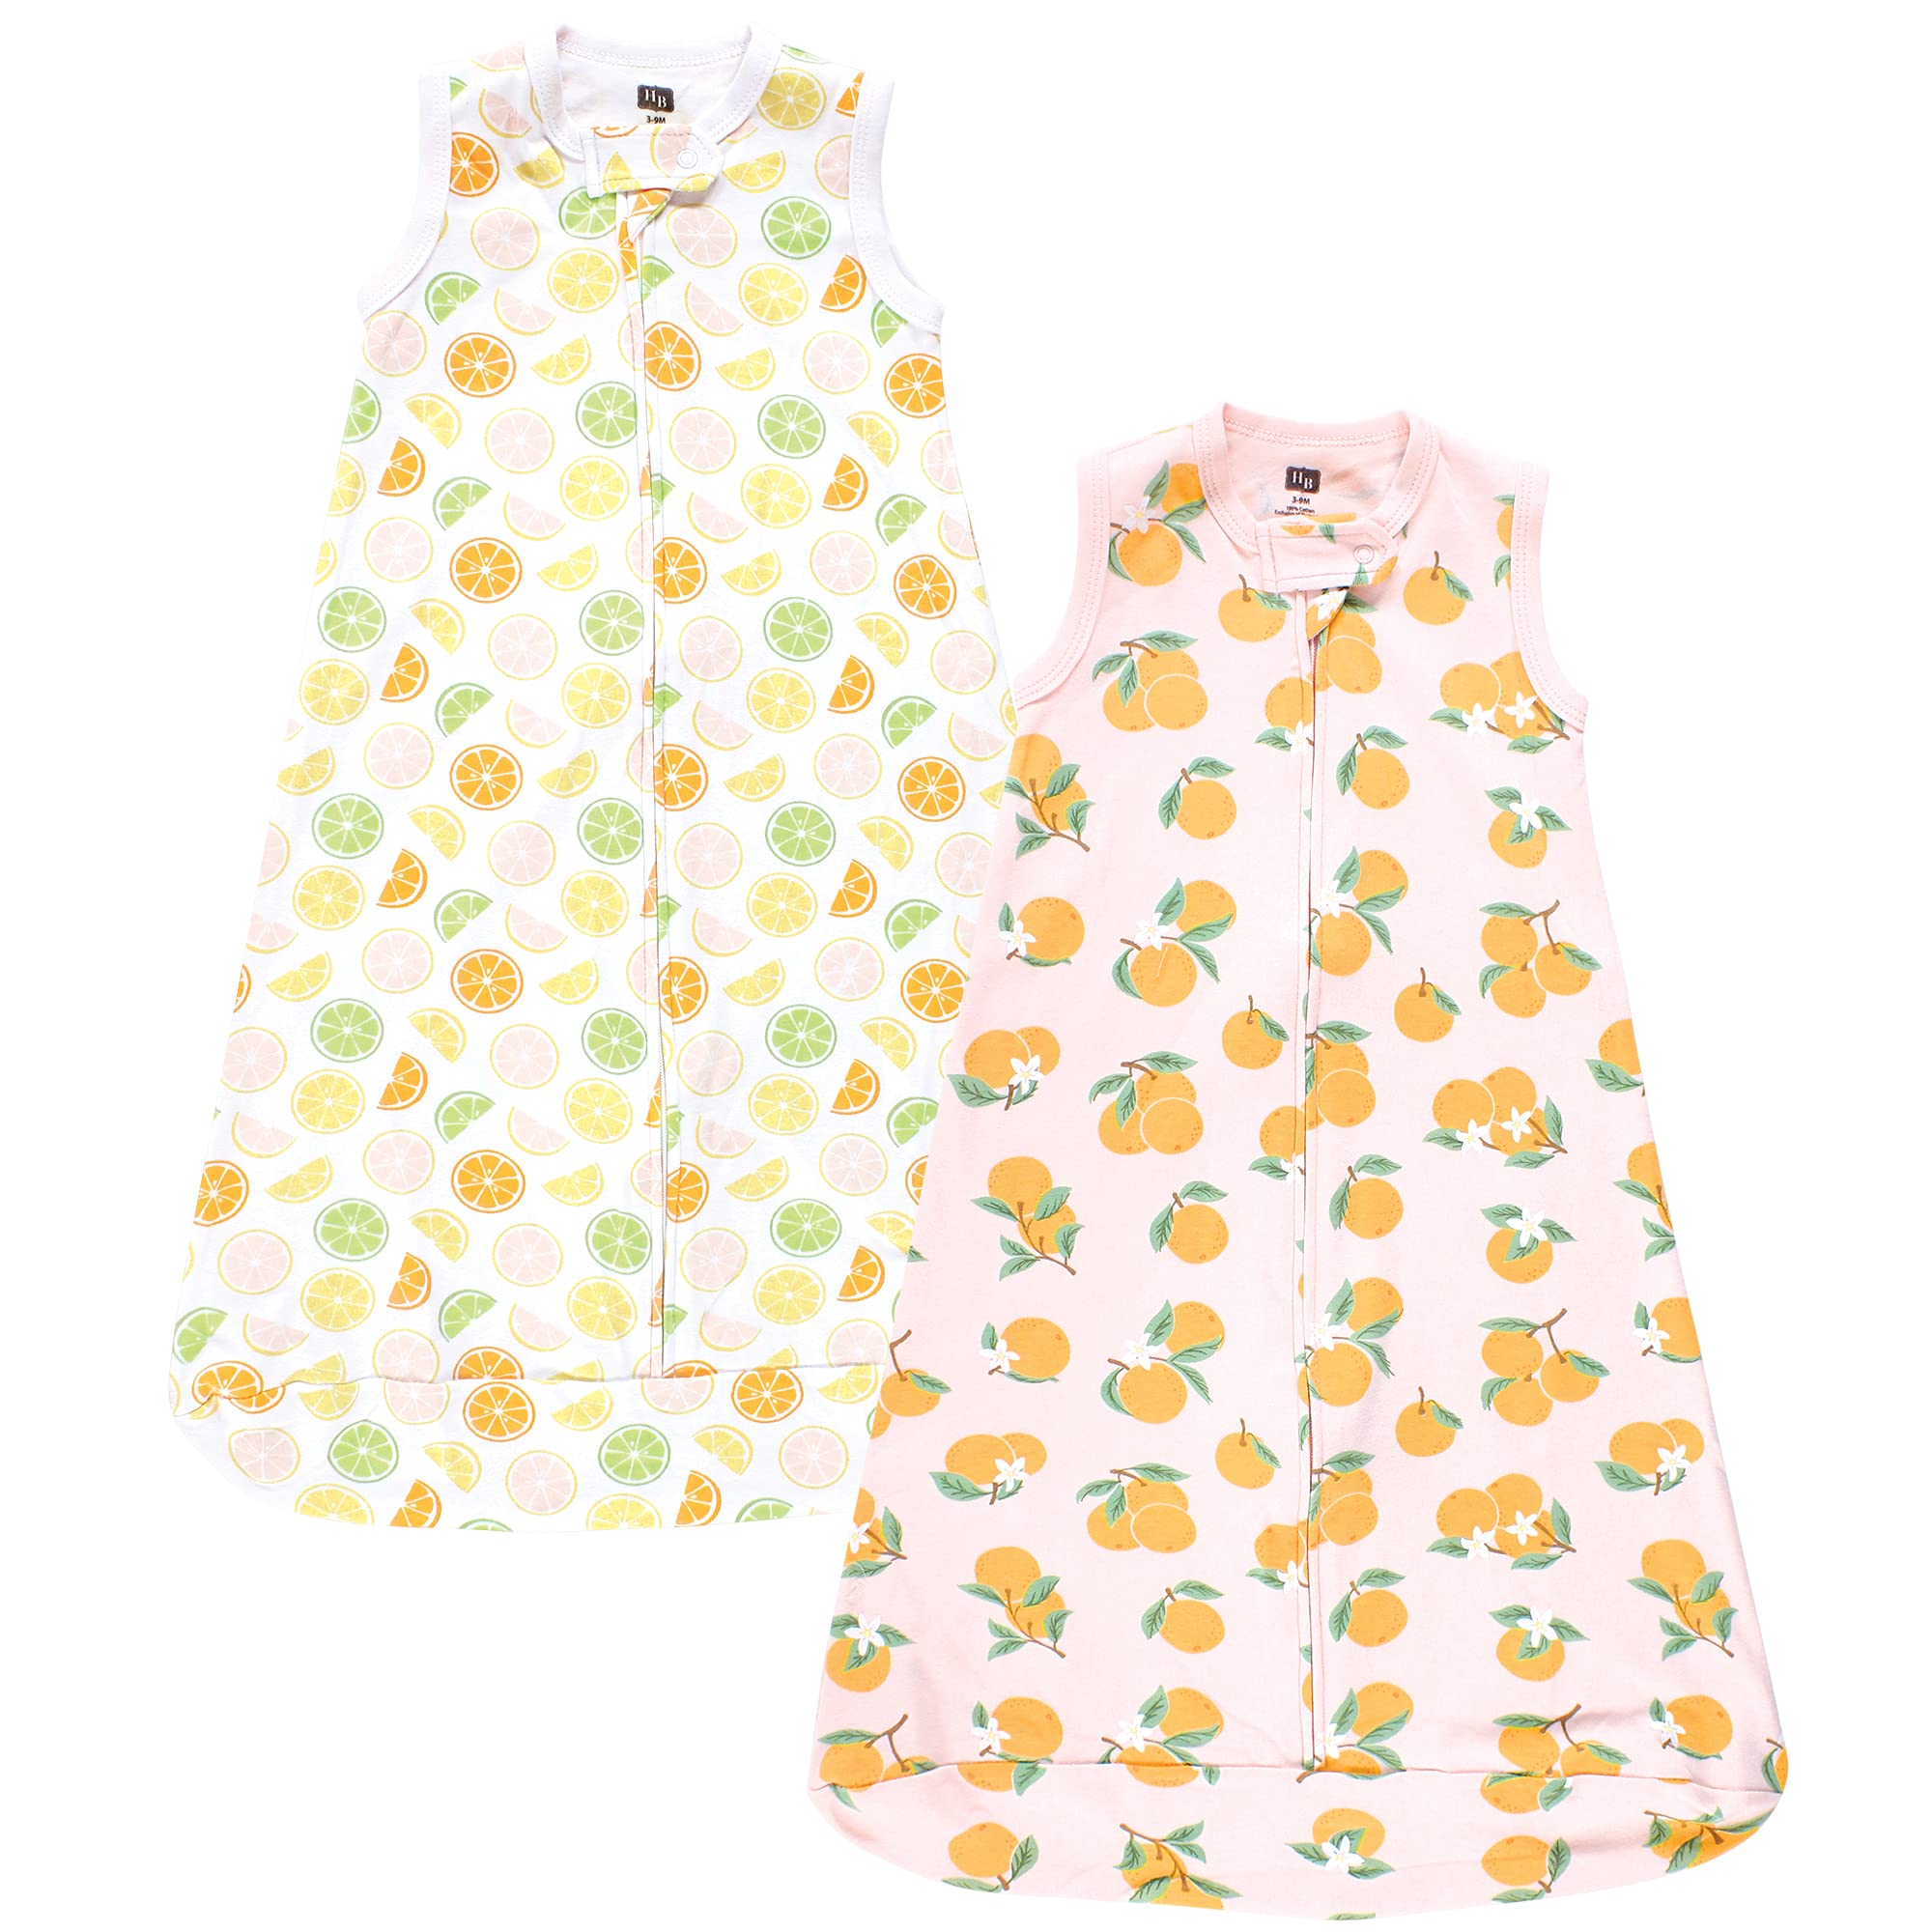 Hudson Baby Unisex Baby Interlock Cotton Sleeveless Sleeping Bag, Citrus Orange, 12-18 Months